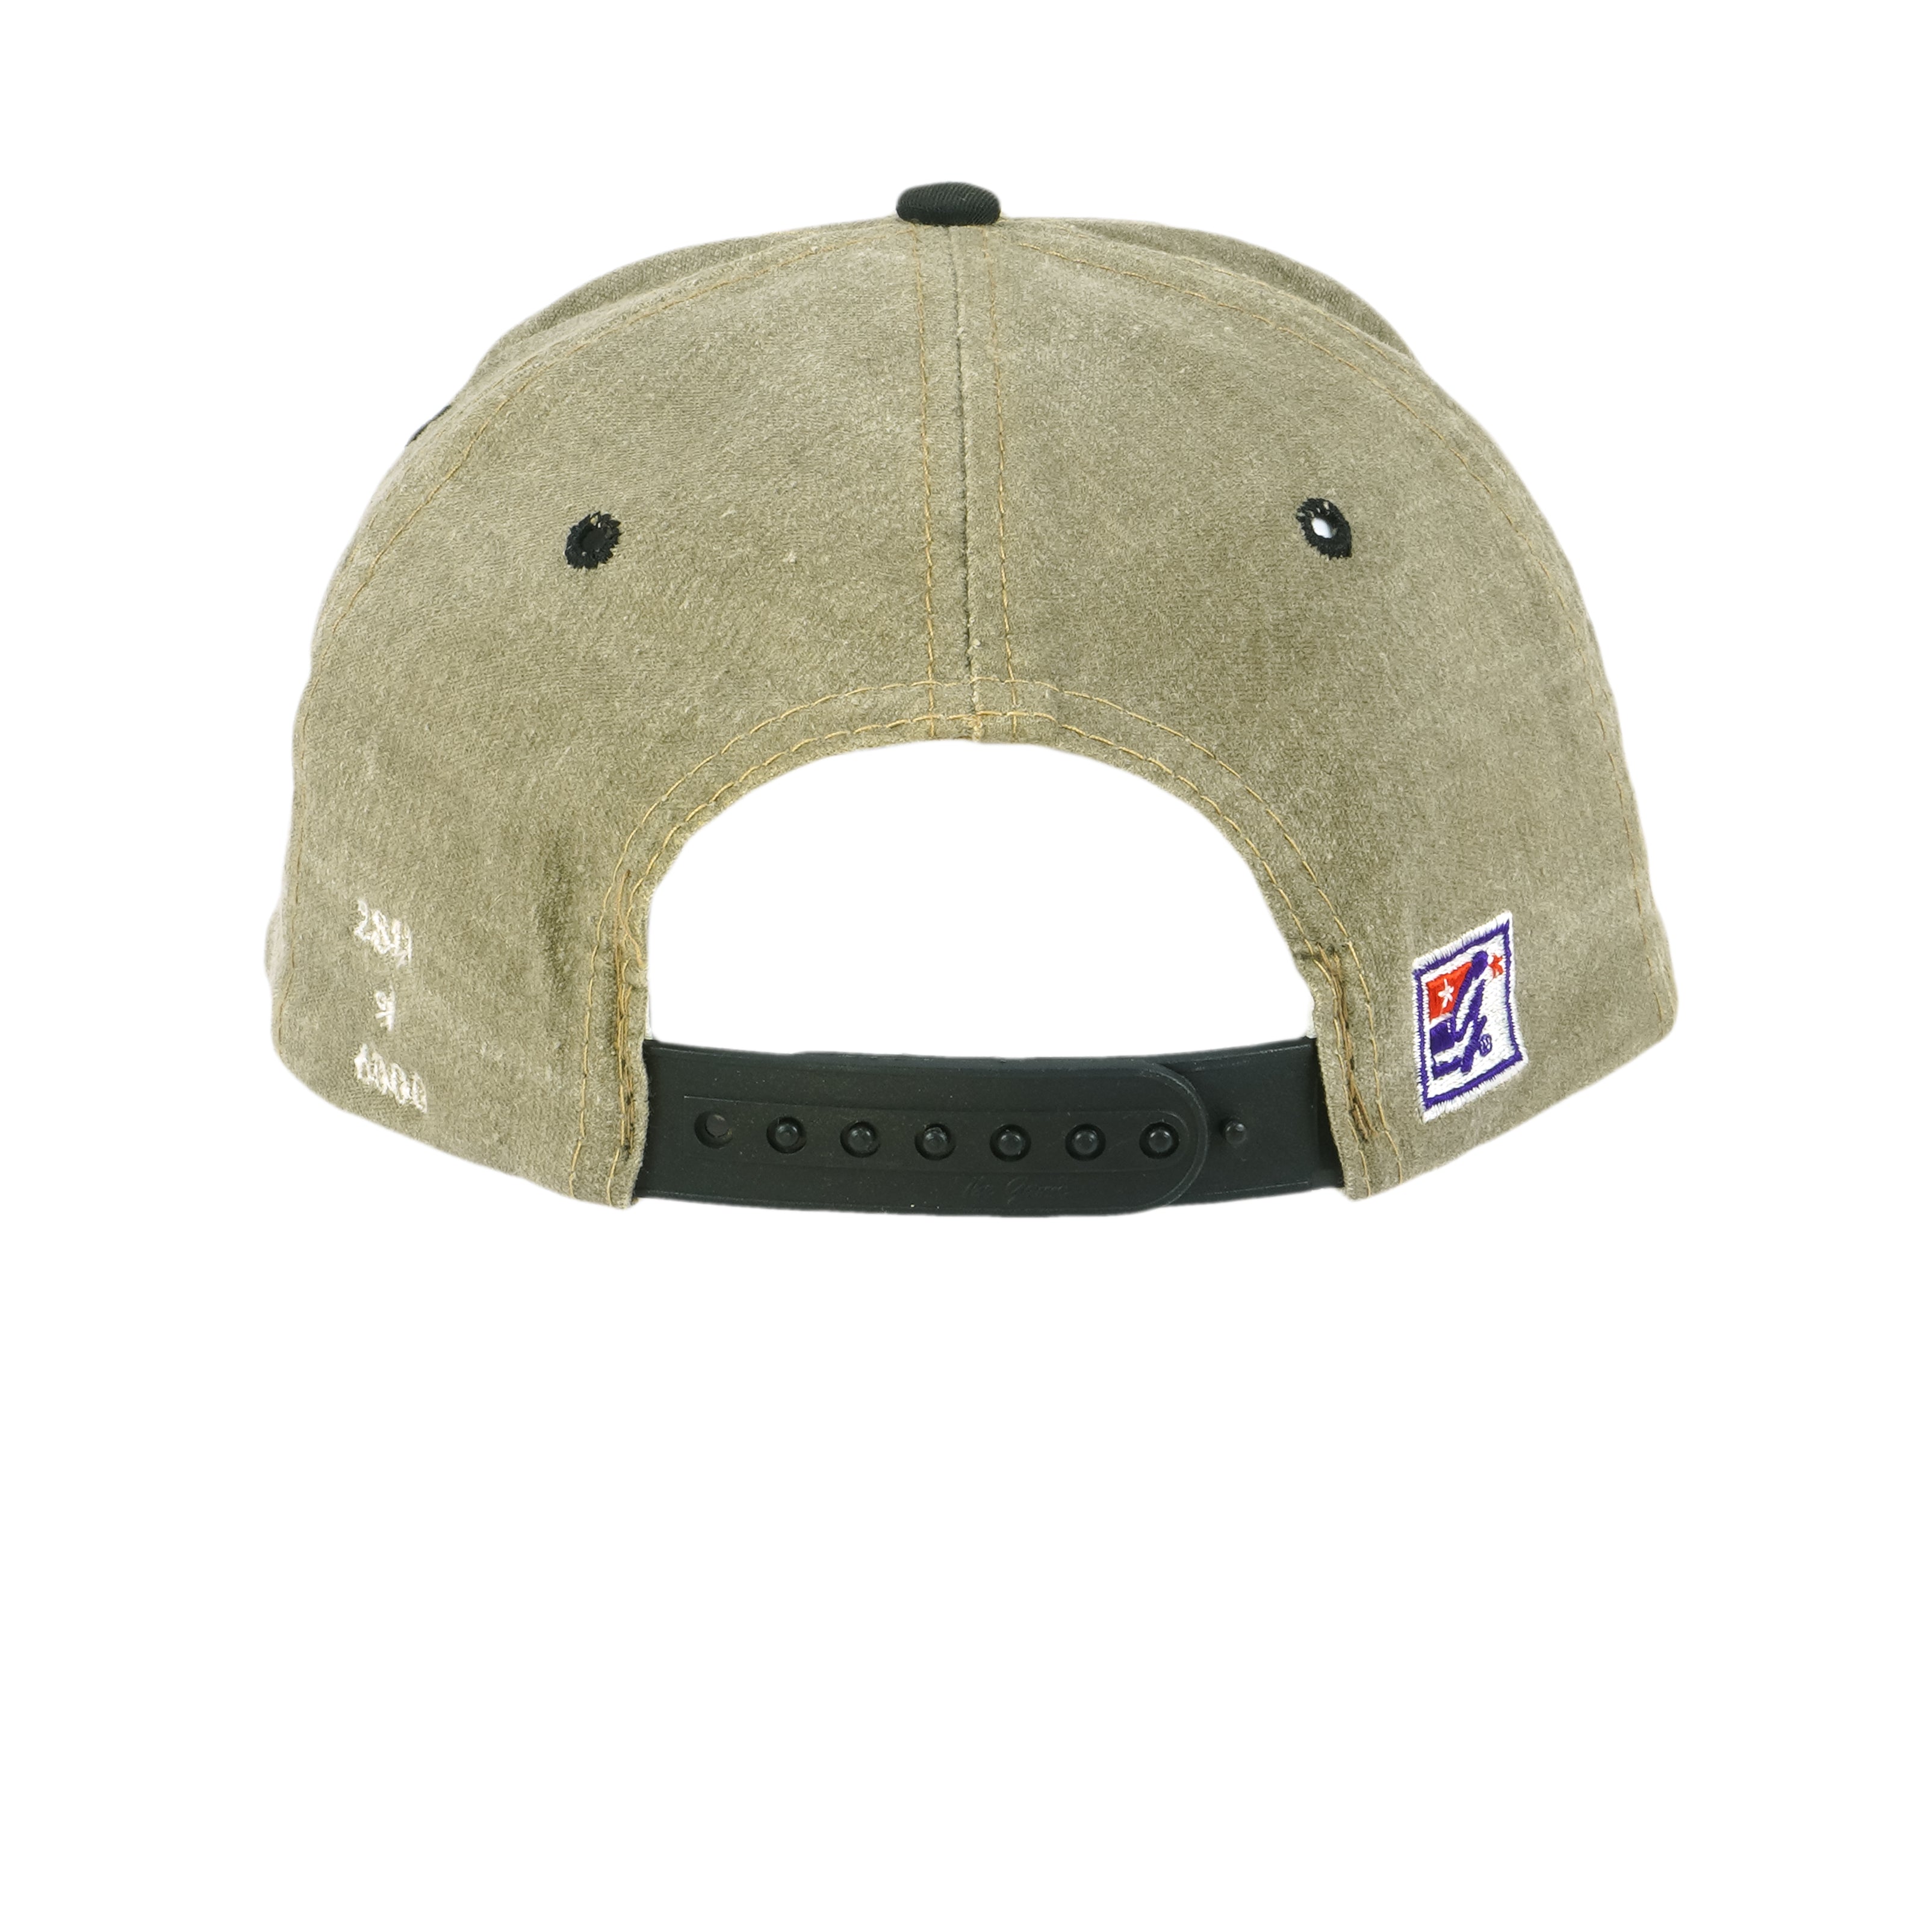 Vintage NBA Logo 7 Orlando Magic Snapback Hat Cap Adjustable